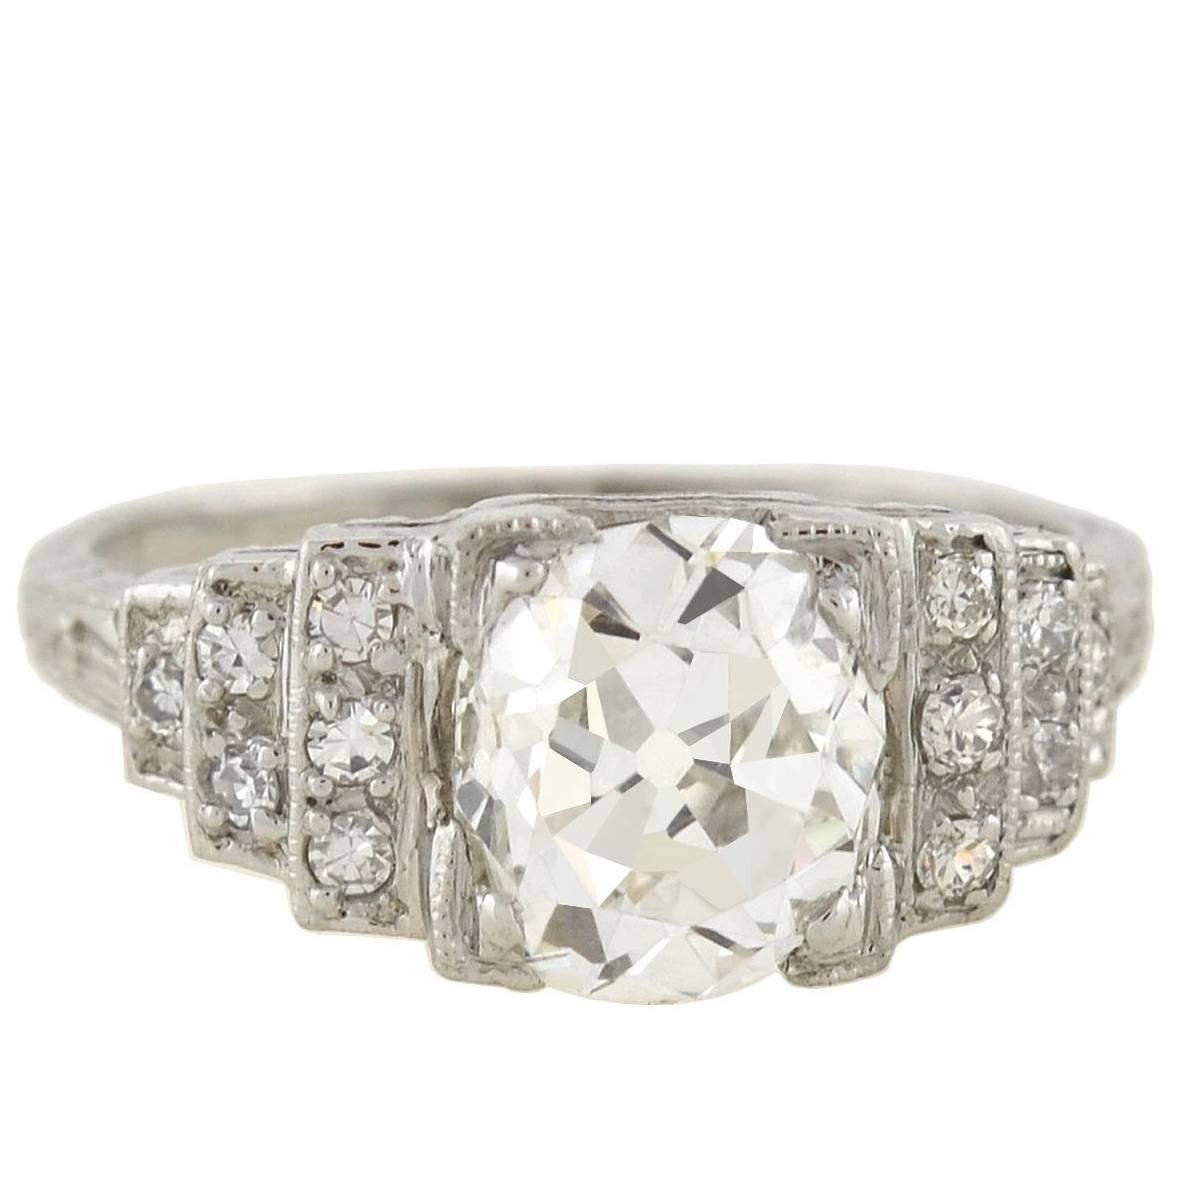 Art Deco GIA Certified 2.16 Carat Diamond Engagement Ring